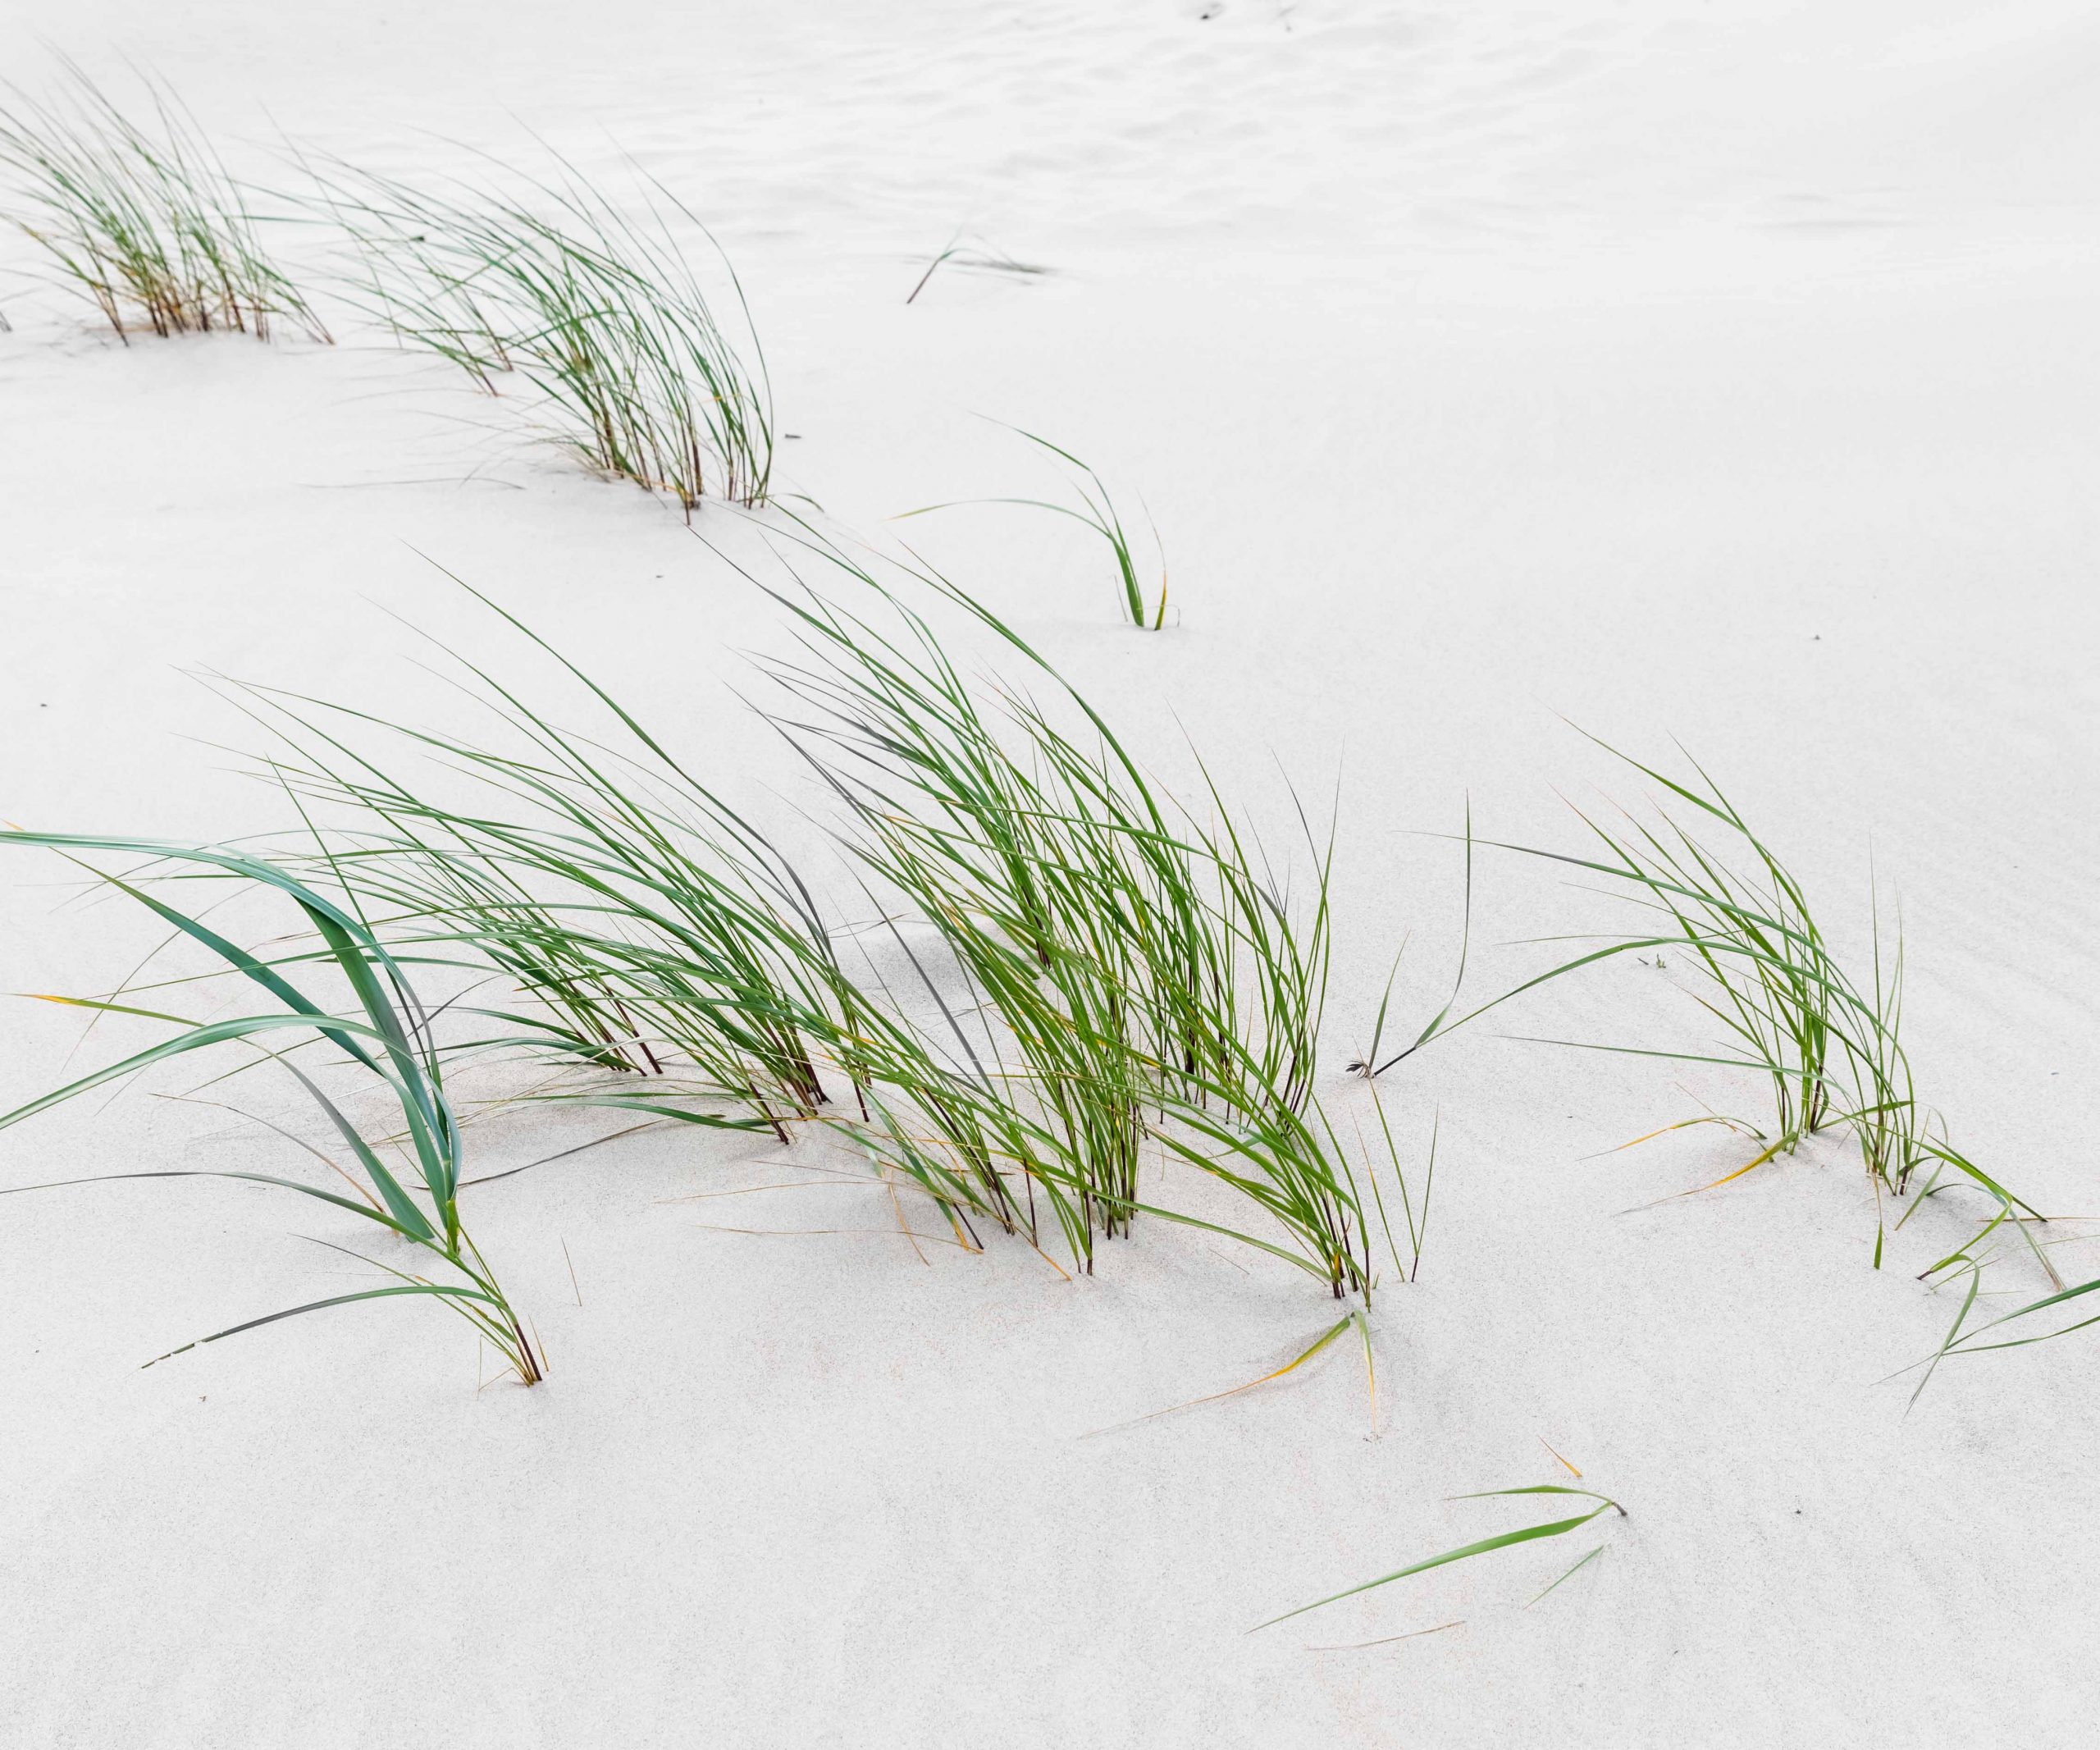 Baltic sea coast near Liepaja, Latvia. Green grass on the sandy beach of the Baltic Sea. Wild nature